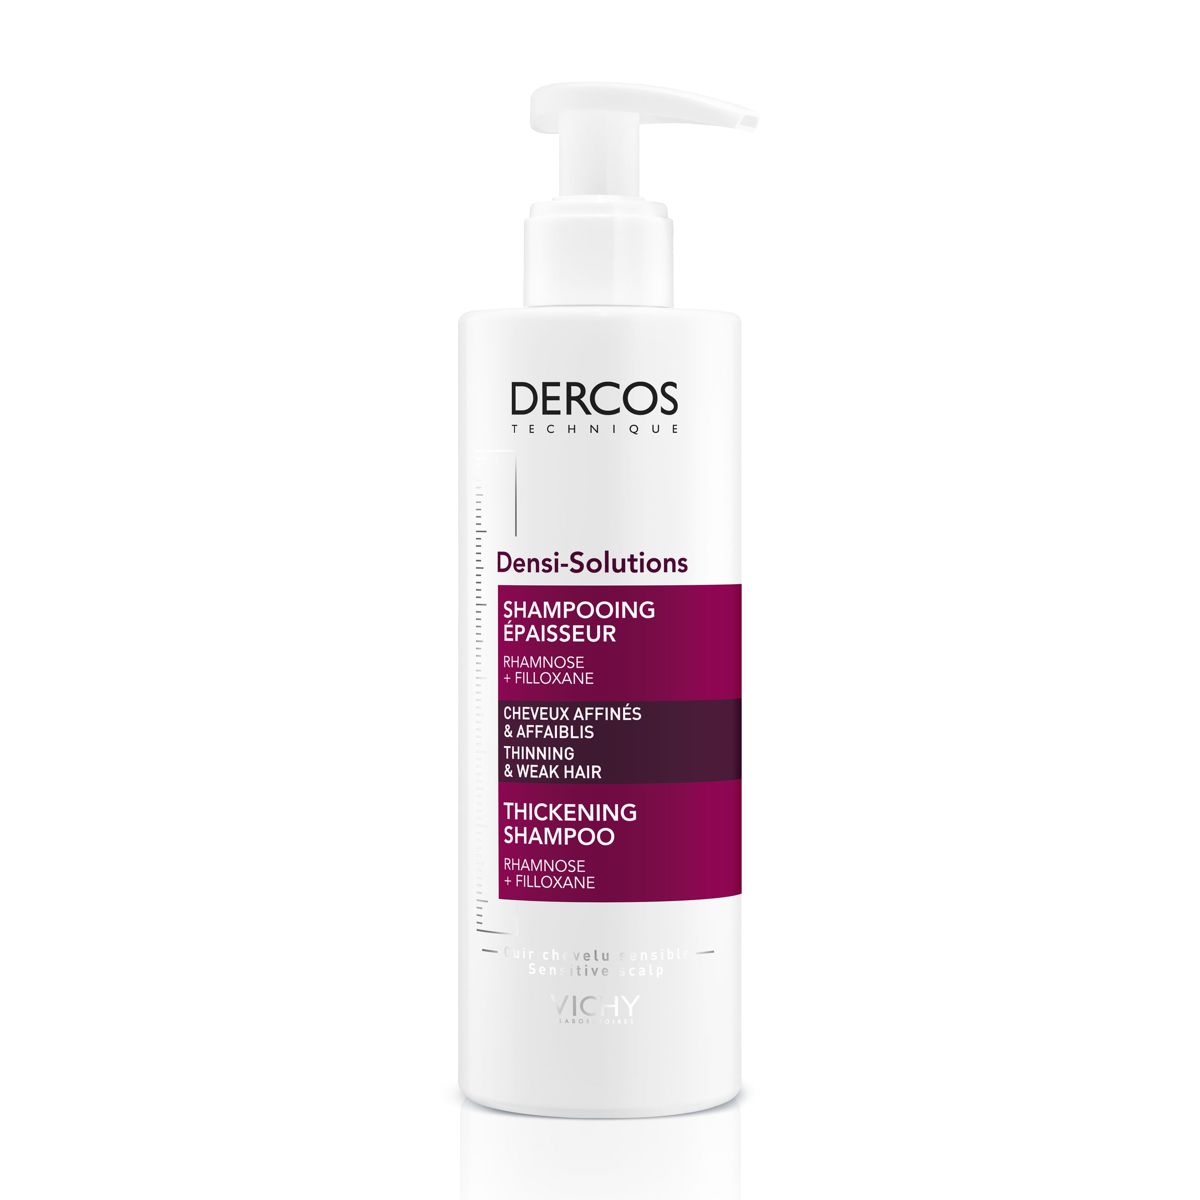 Vichy Dercos Densi-Solutions Shampoo Flasche 250 ml